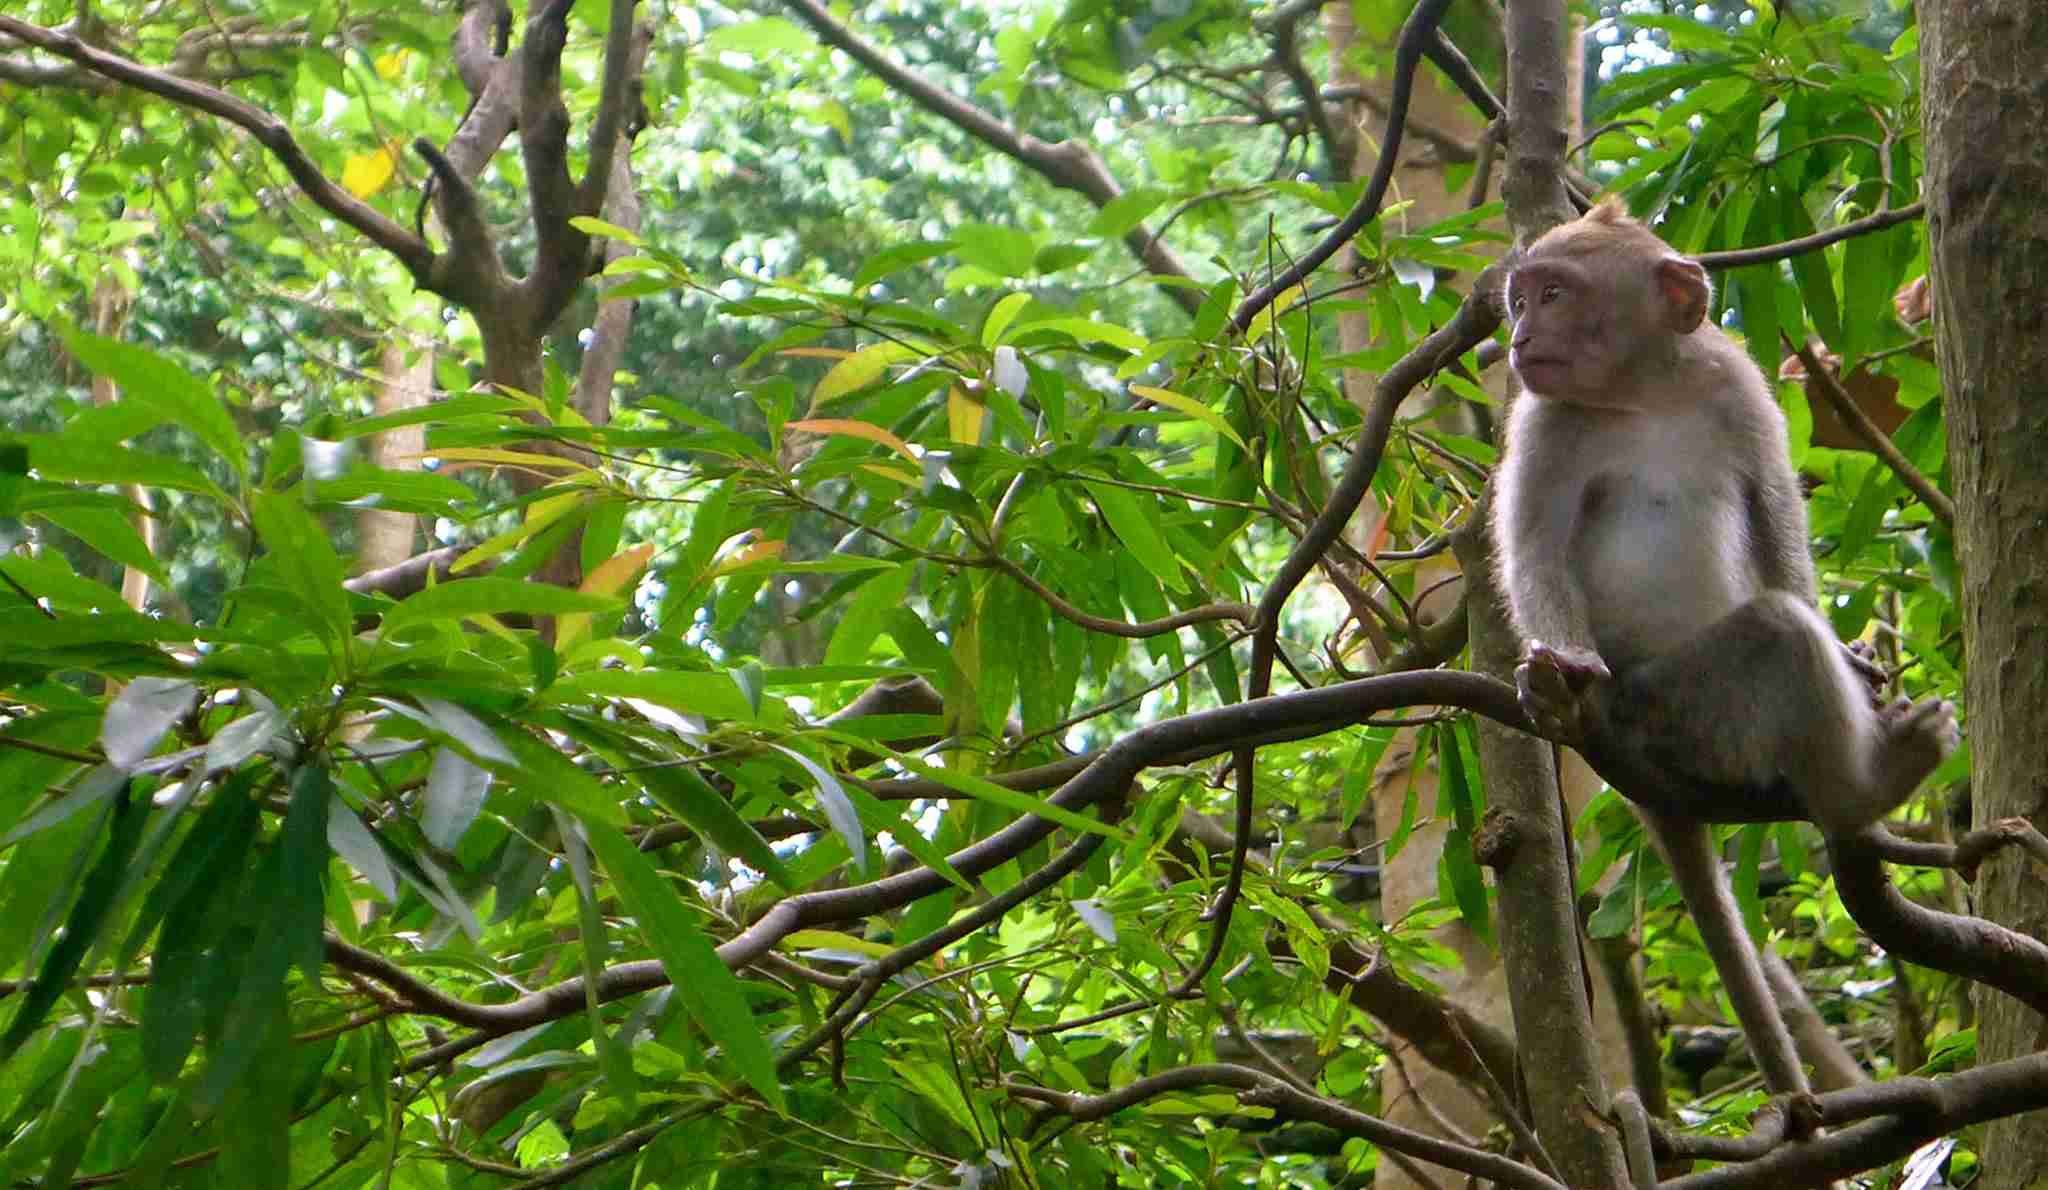 Jungle monkeys. Обезьяны острова Борнео. Шимпанзе в джунглях. Африканские джунгли с шимпанзе. Животные джунглей.